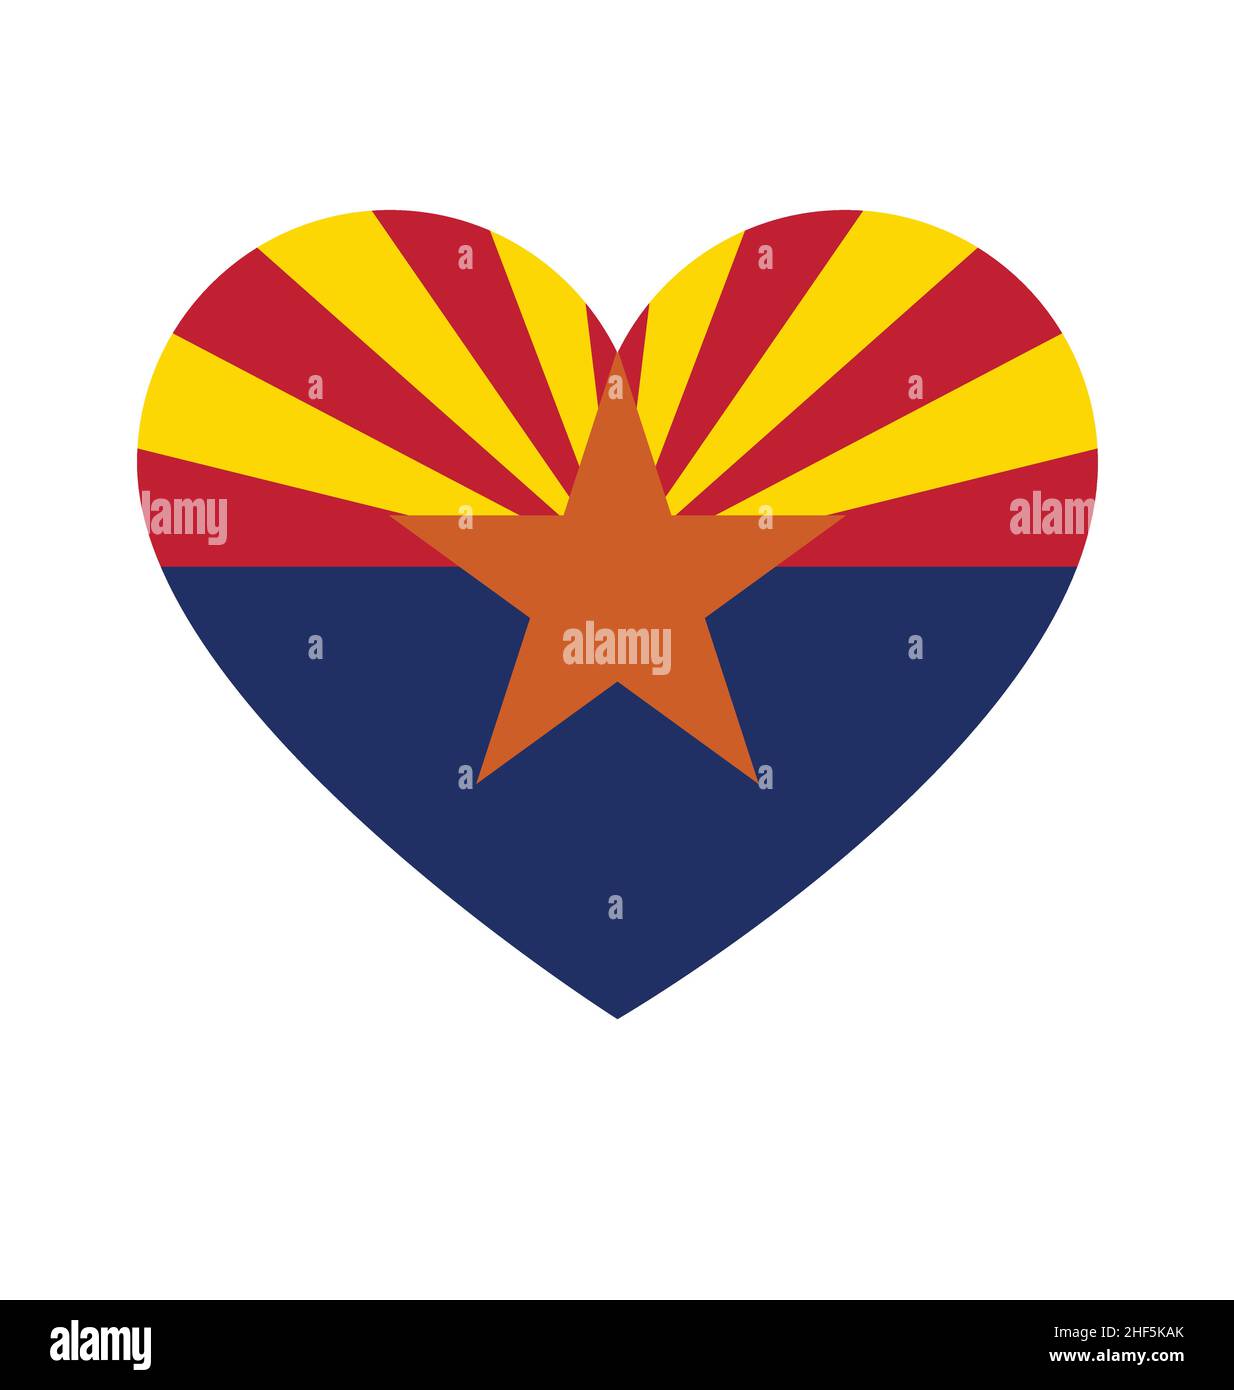 arizona az state flag in heart shape symbol logo icon vector isolated on white background Stock Vector